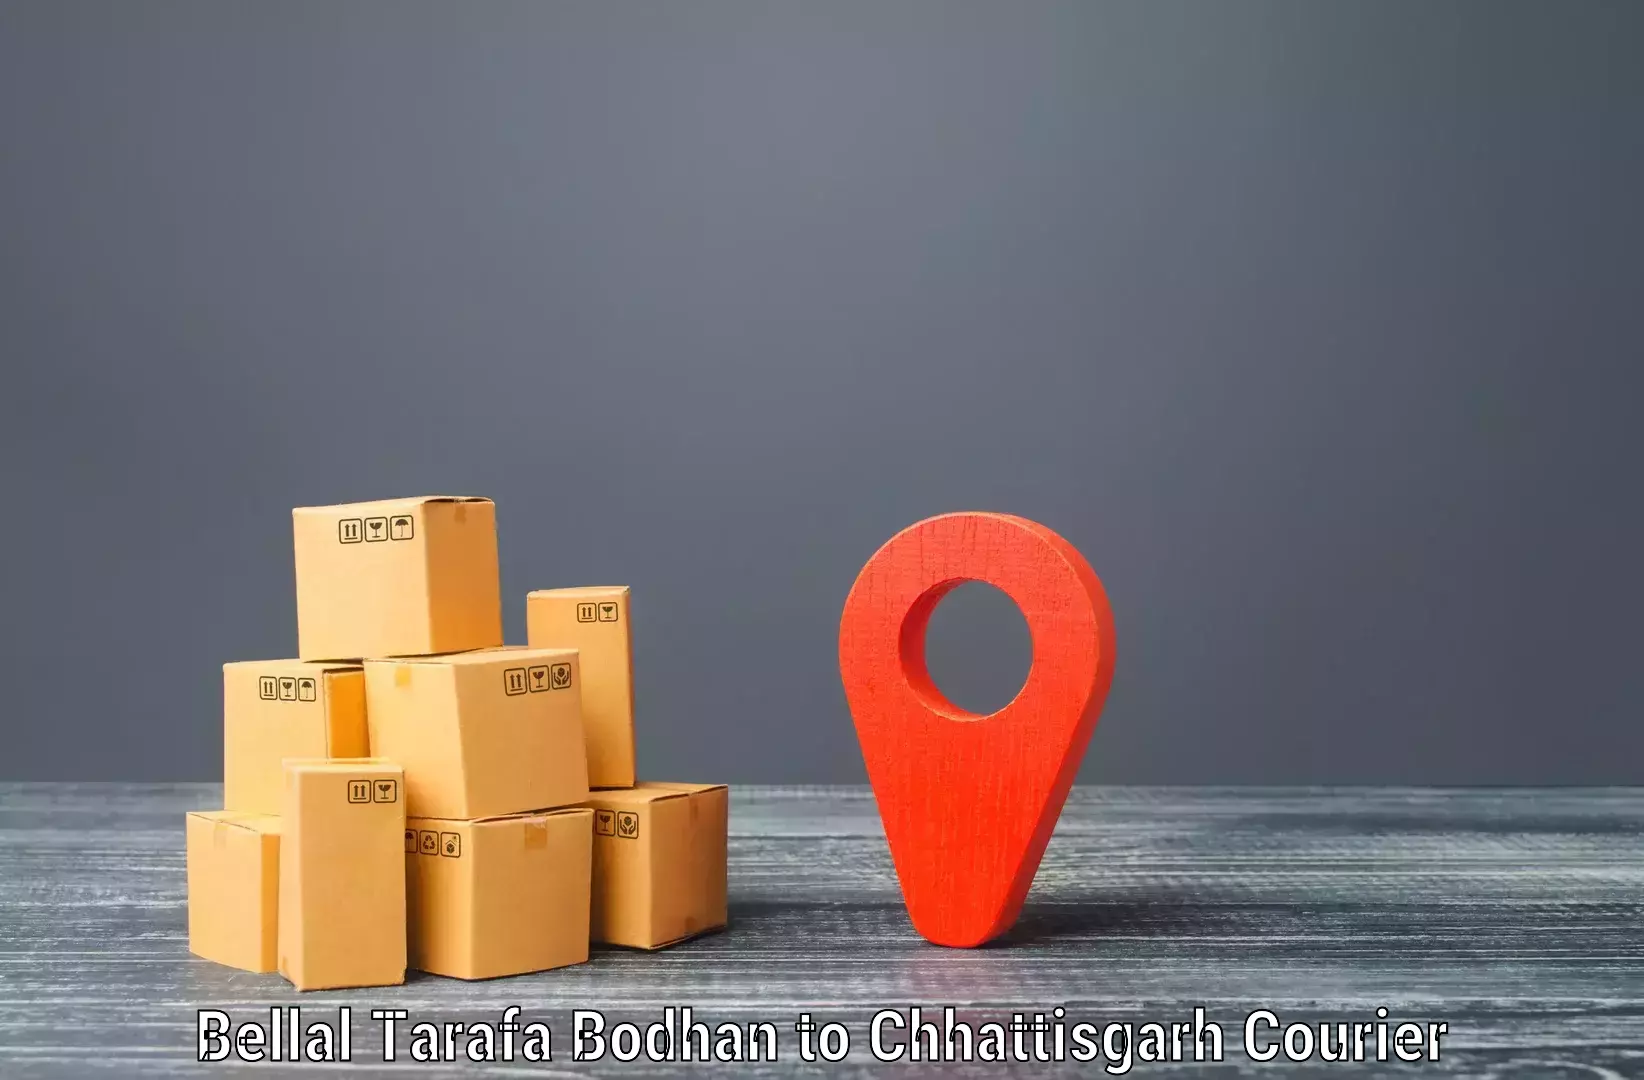 Reliable delivery network Bellal Tarafa Bodhan to Chhattisgarh